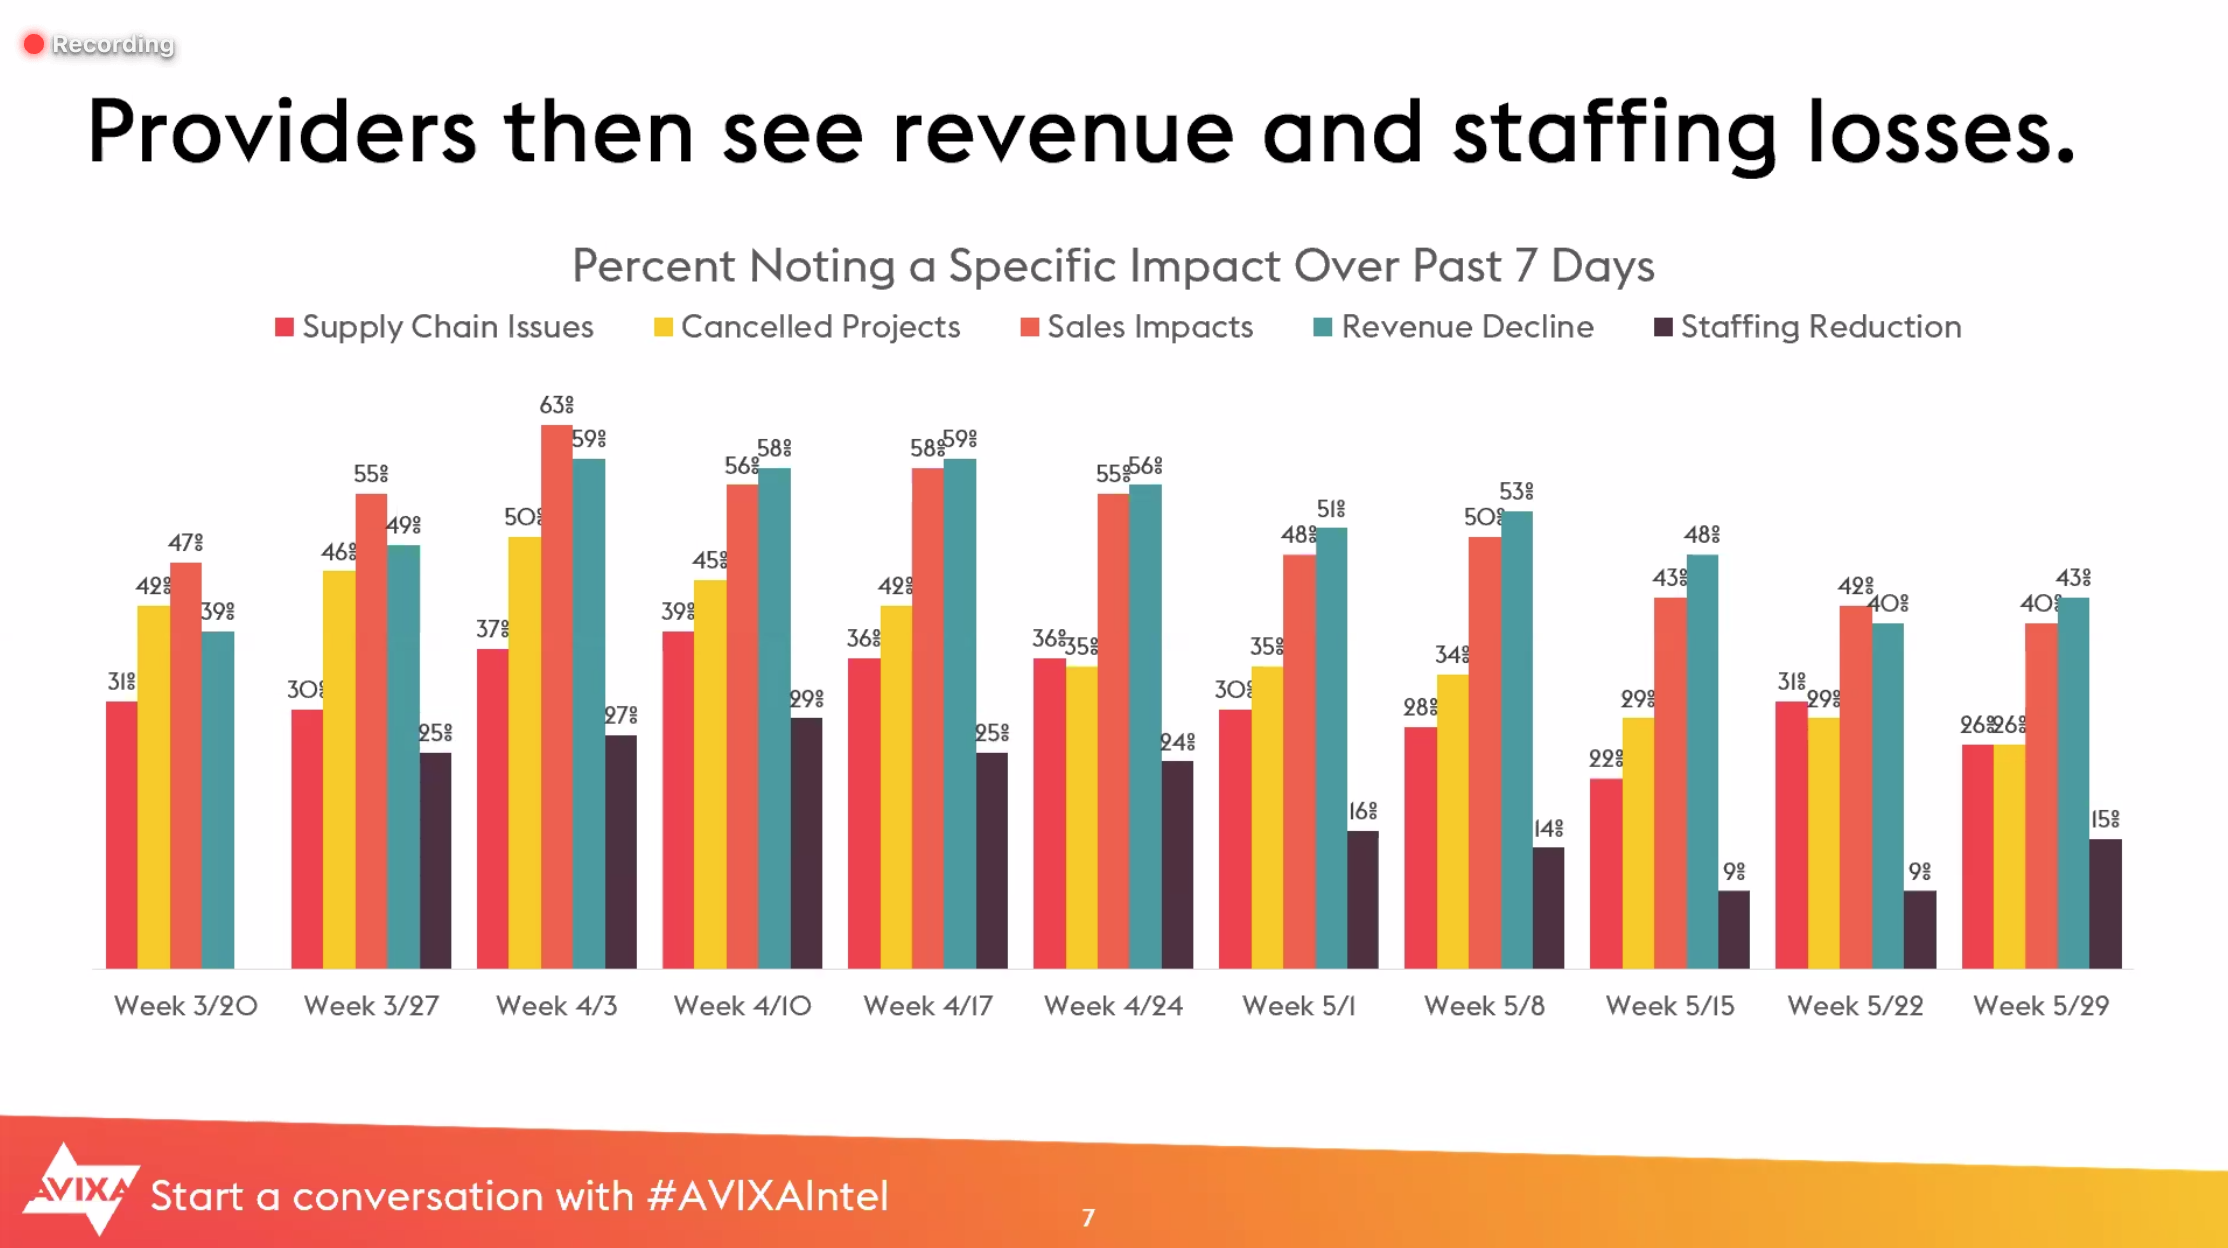 Slide from AVIXA webinar presentation discussing revenue and staffing implications